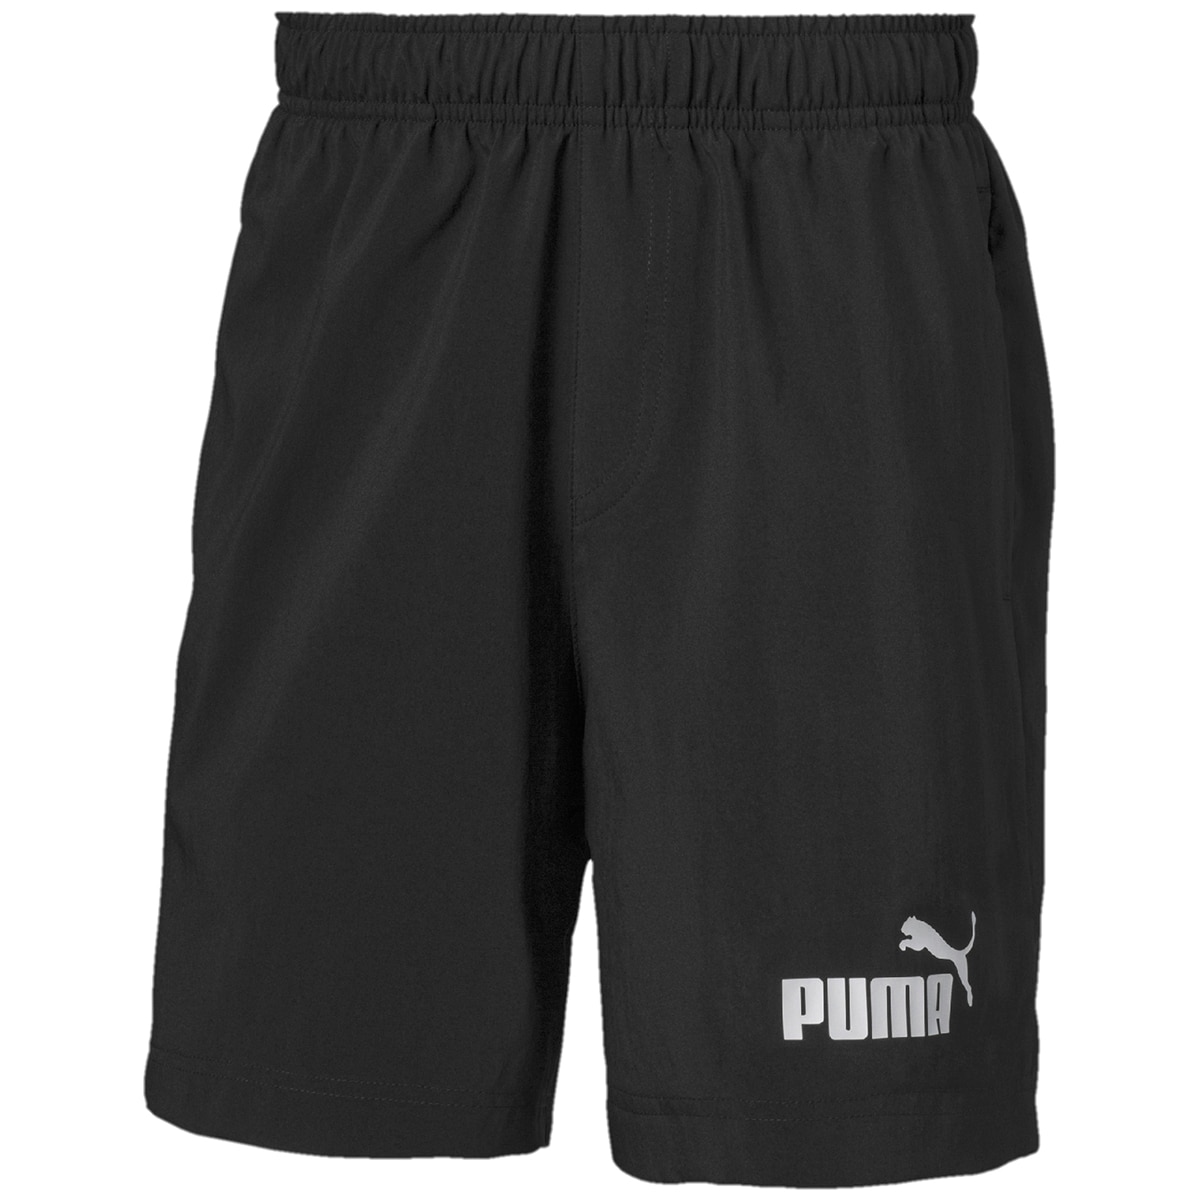 Puma Boys Short - Black